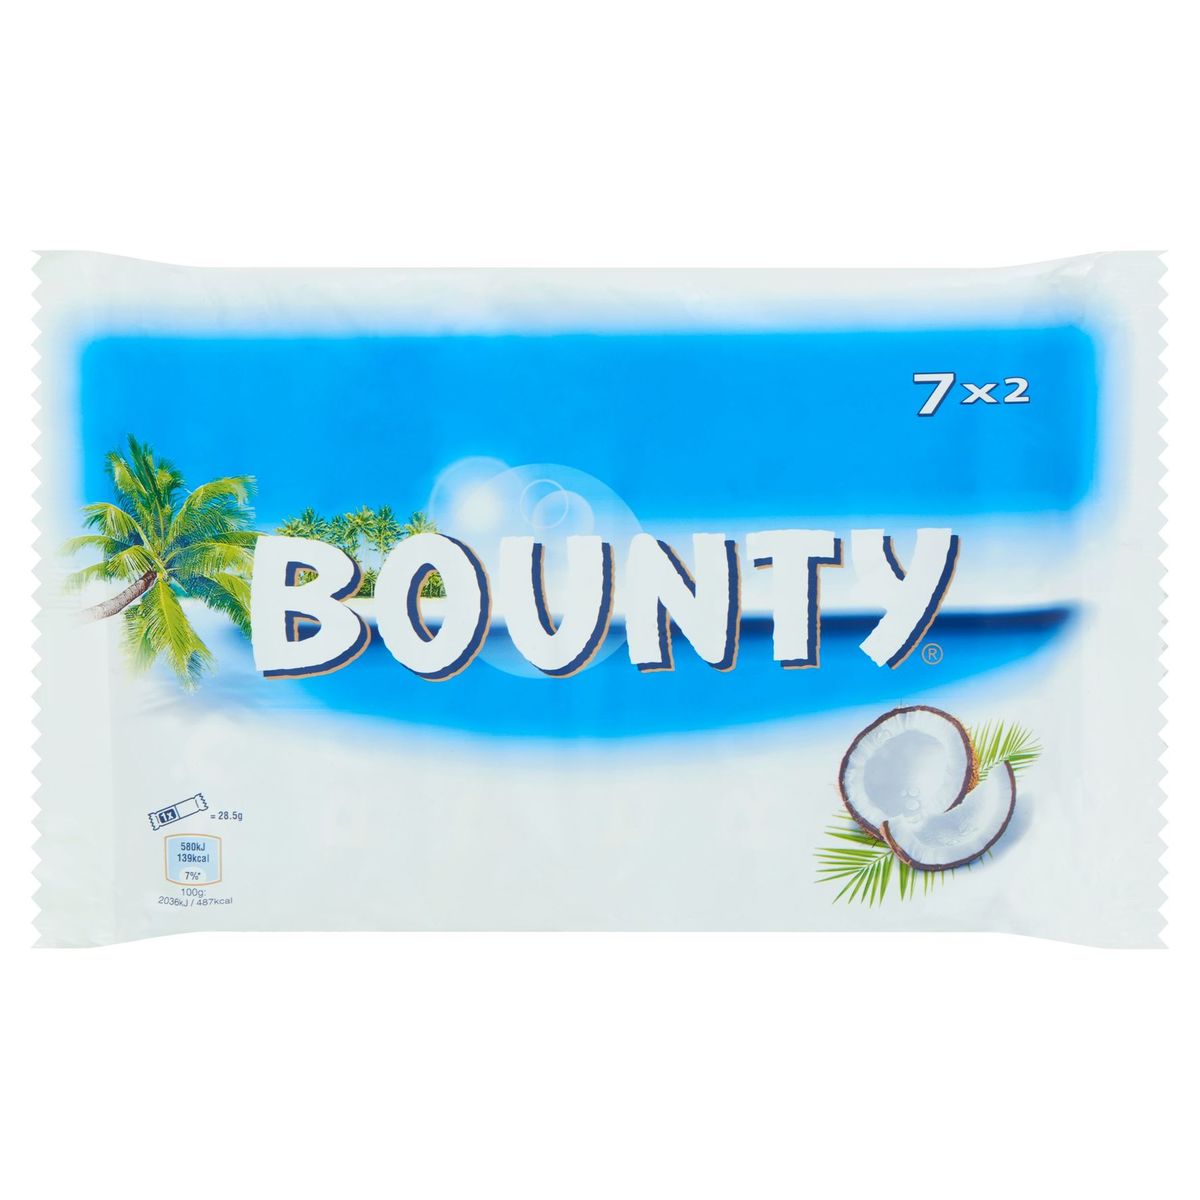 Bounty Chocolade Repen 7 x 2 x 28.5 g